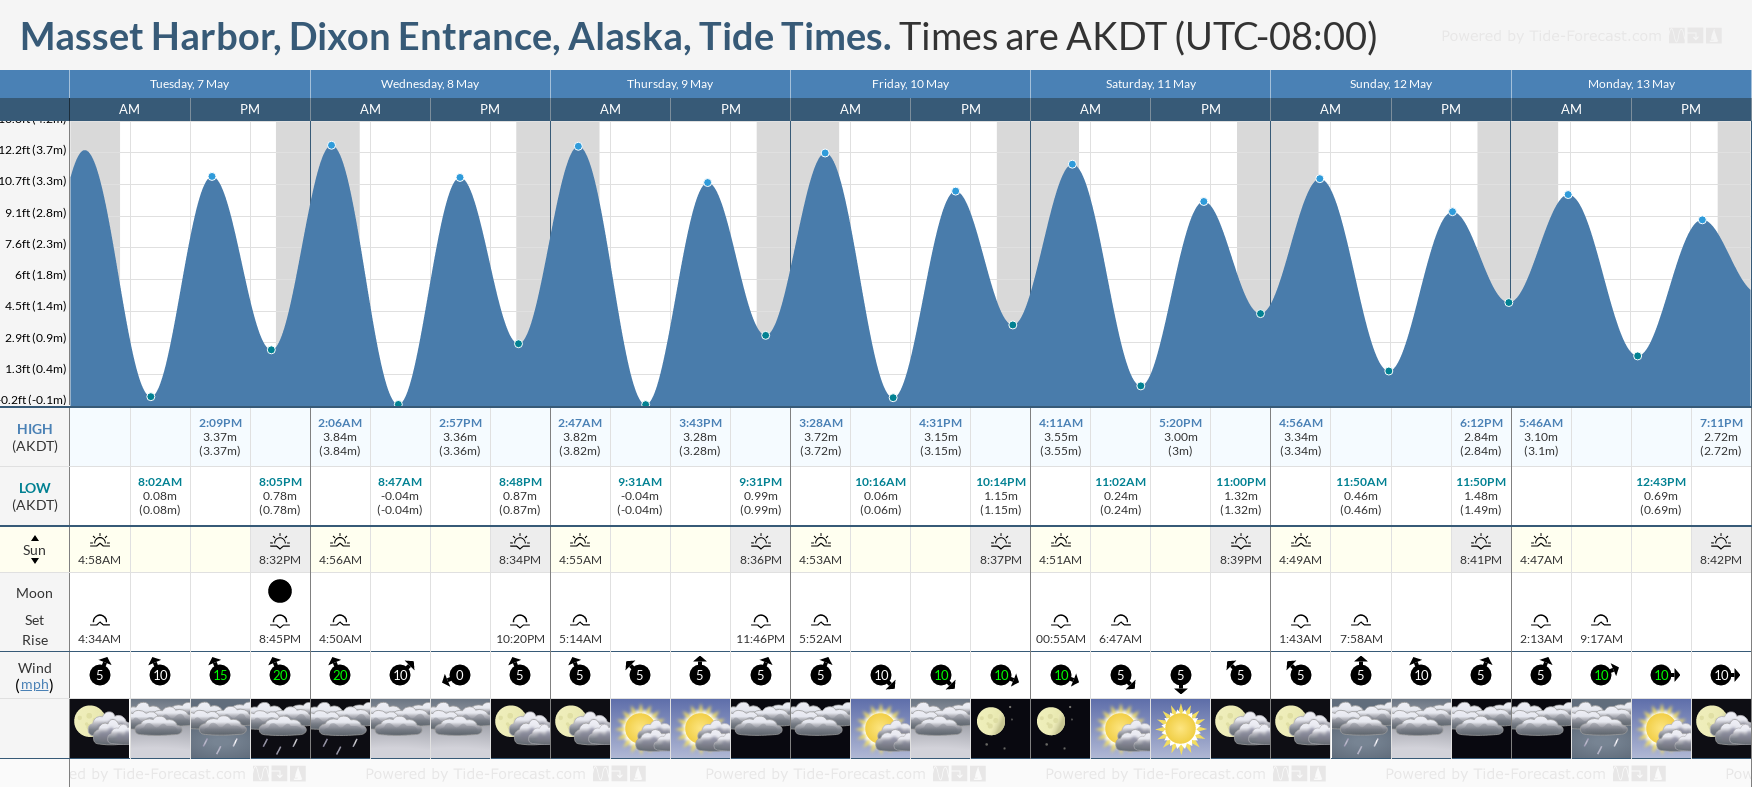 Masset Harbor, Dixon Entrance, Alaska Tide Chart including high and low tide tide times for the next 7 days